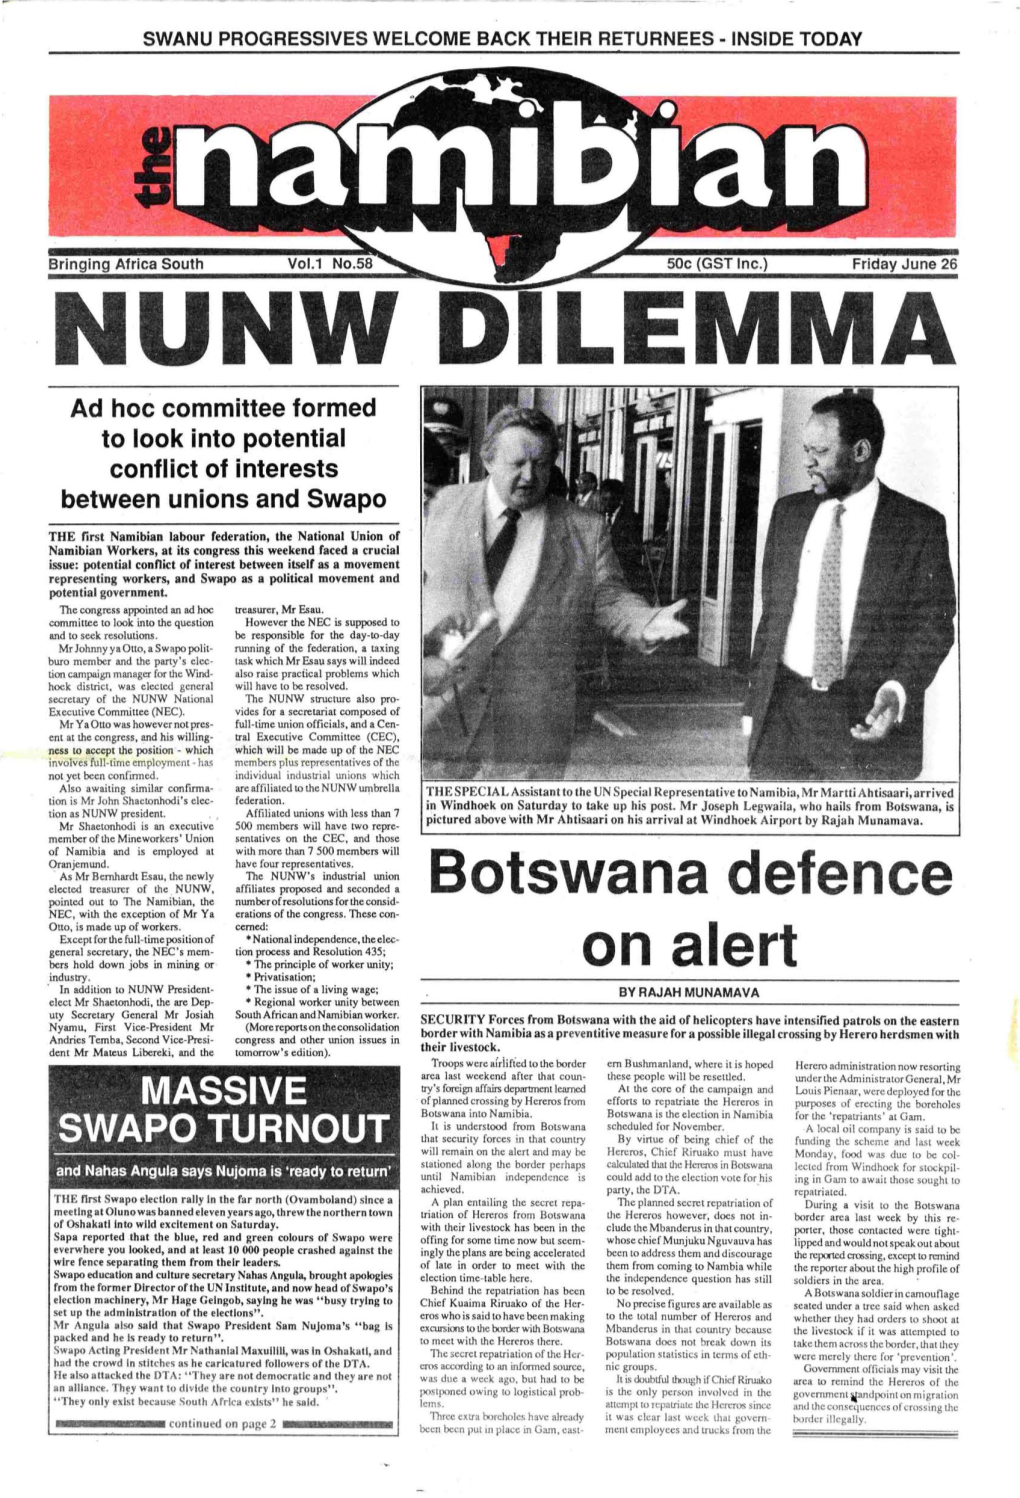 Botswana Defence on Alert